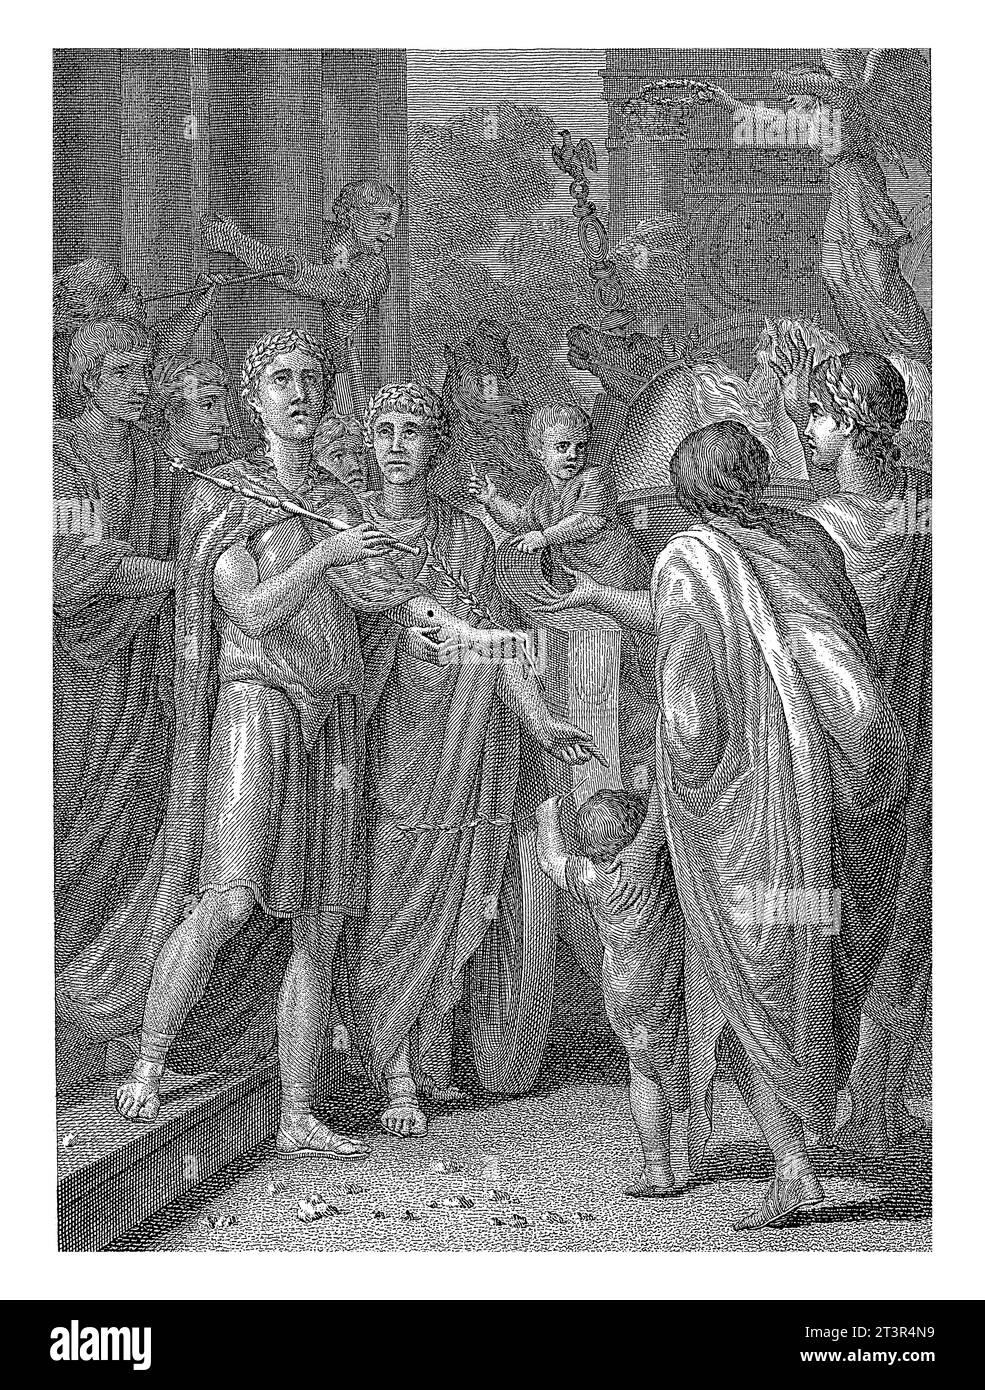 Processione trionfale di Germanico, Louis E.F. Garreau, dopo Jean Grandjean, 1783 la processione trionfale di Germanico a Roma. Durante questa immissione, Foto Stock